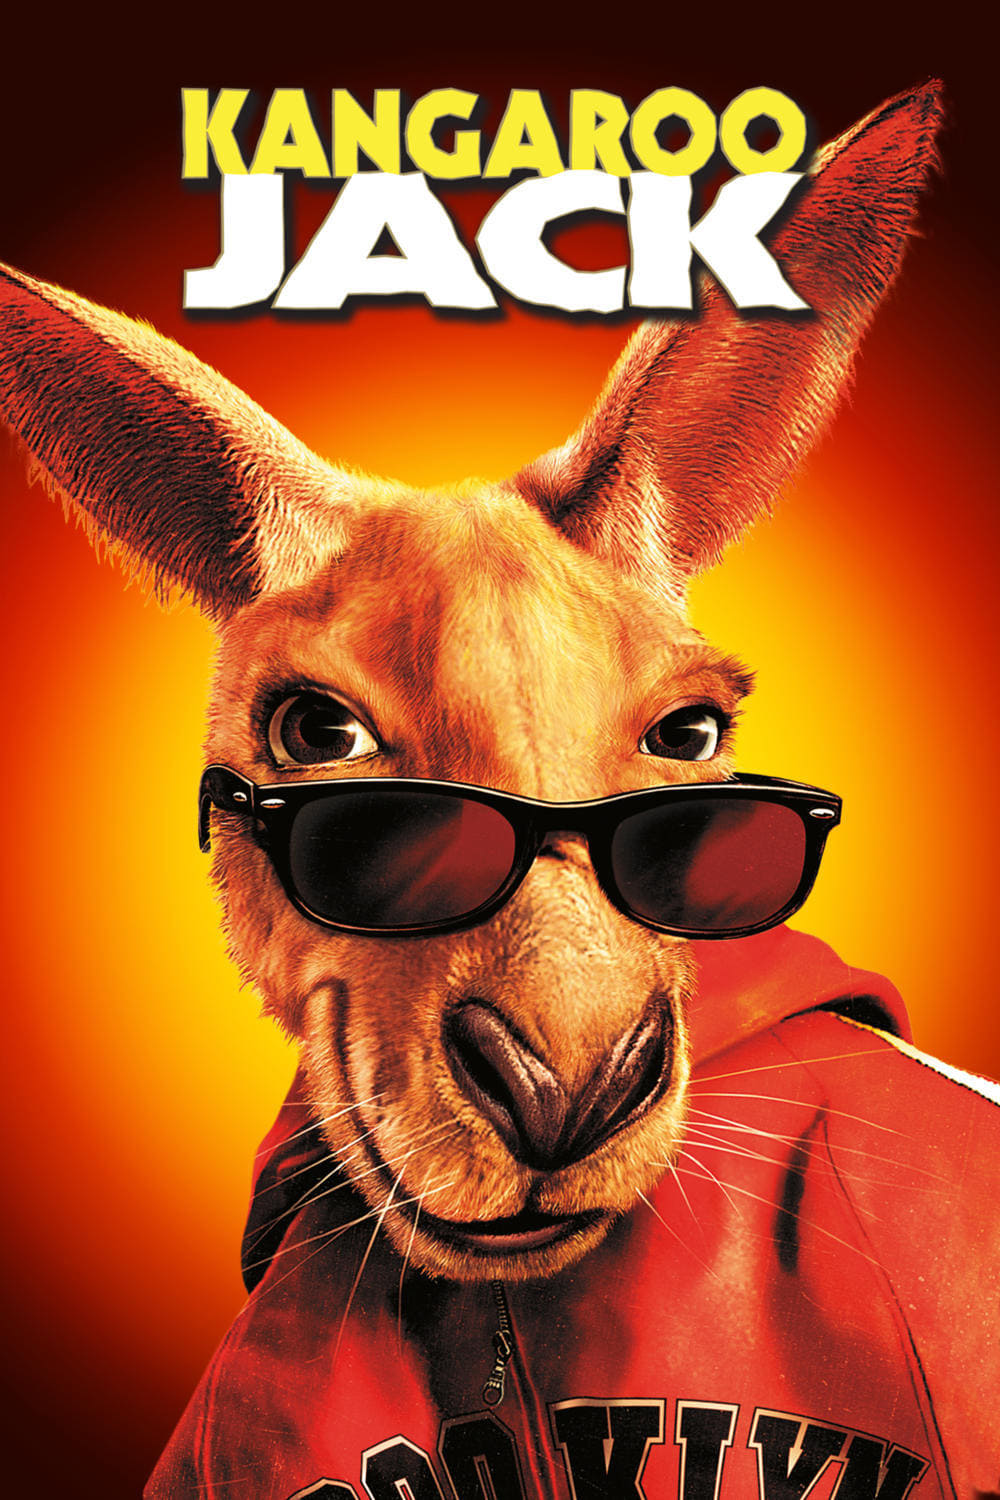 Kangourou Jack (2003)